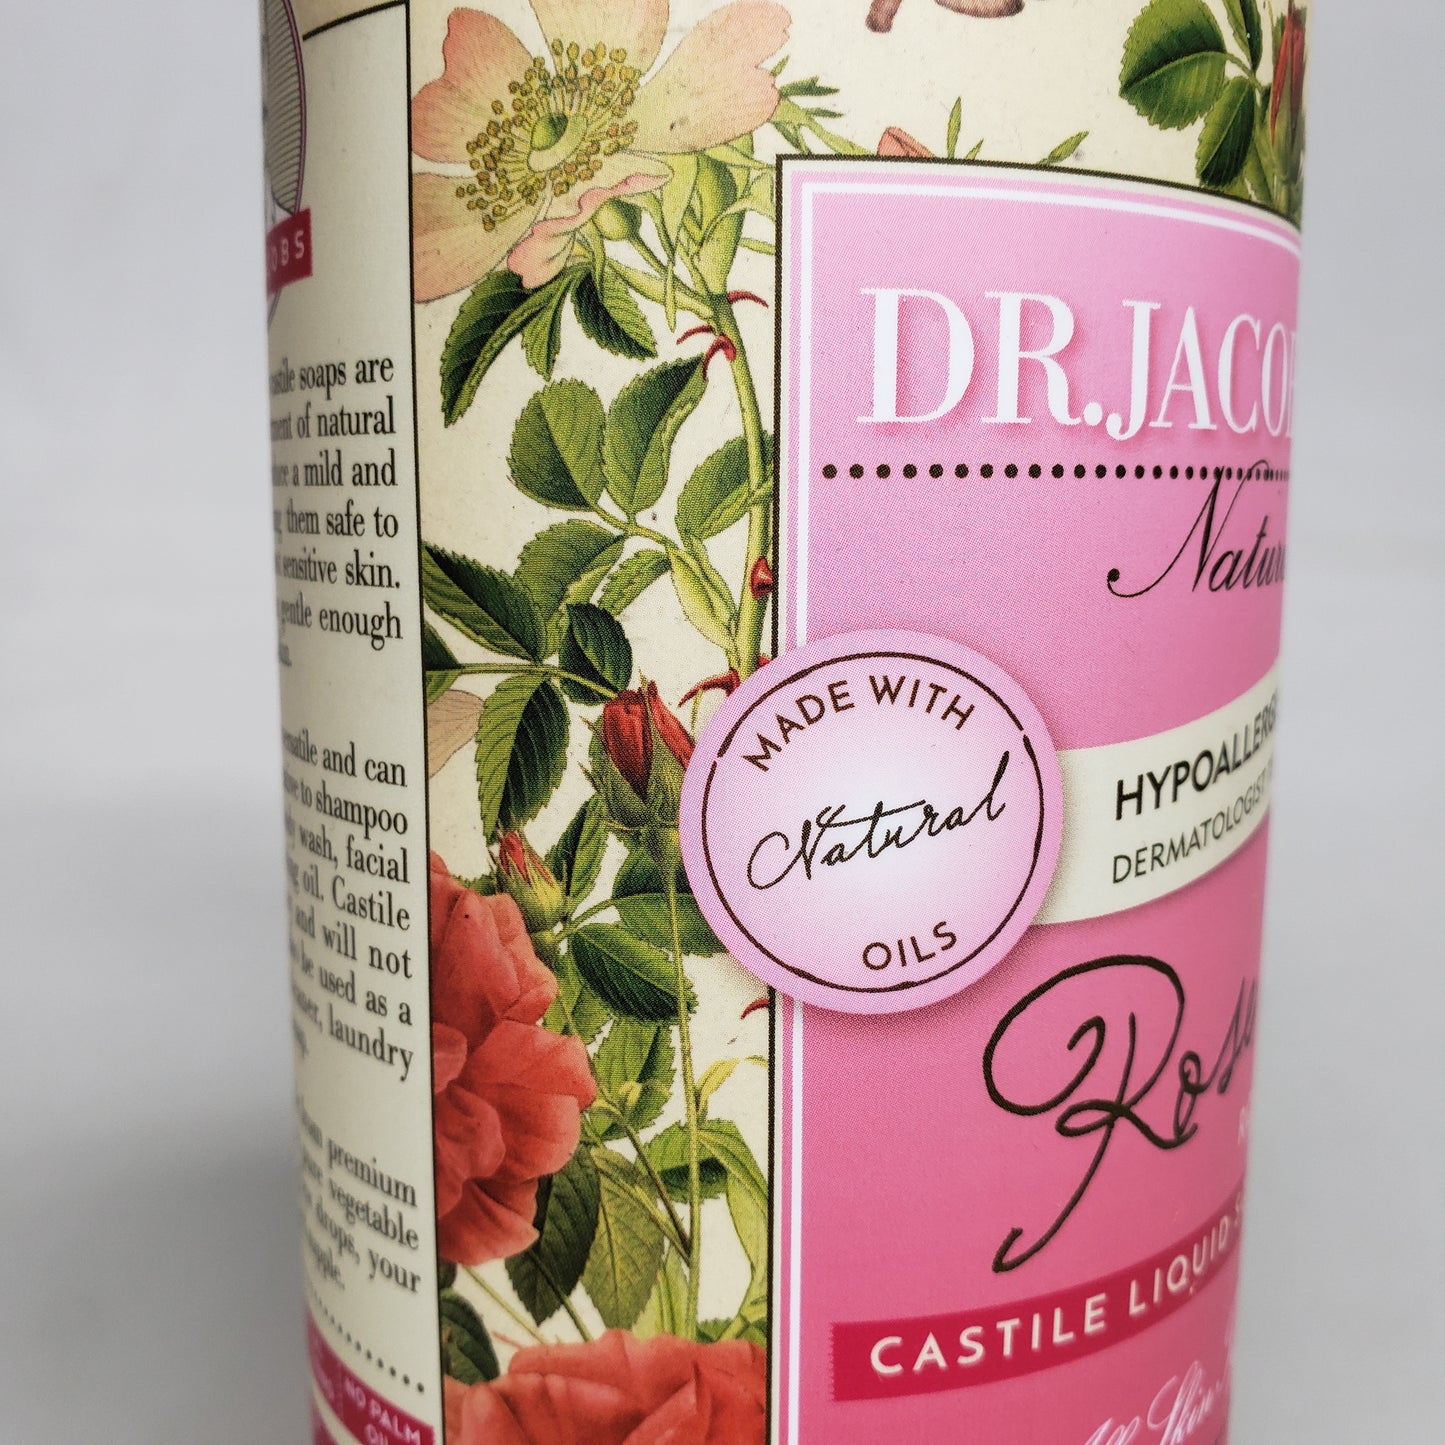 DR. JACOBS NATURALS Rose Castile Liquid Soap 32 oz Hypoallergenic (New)